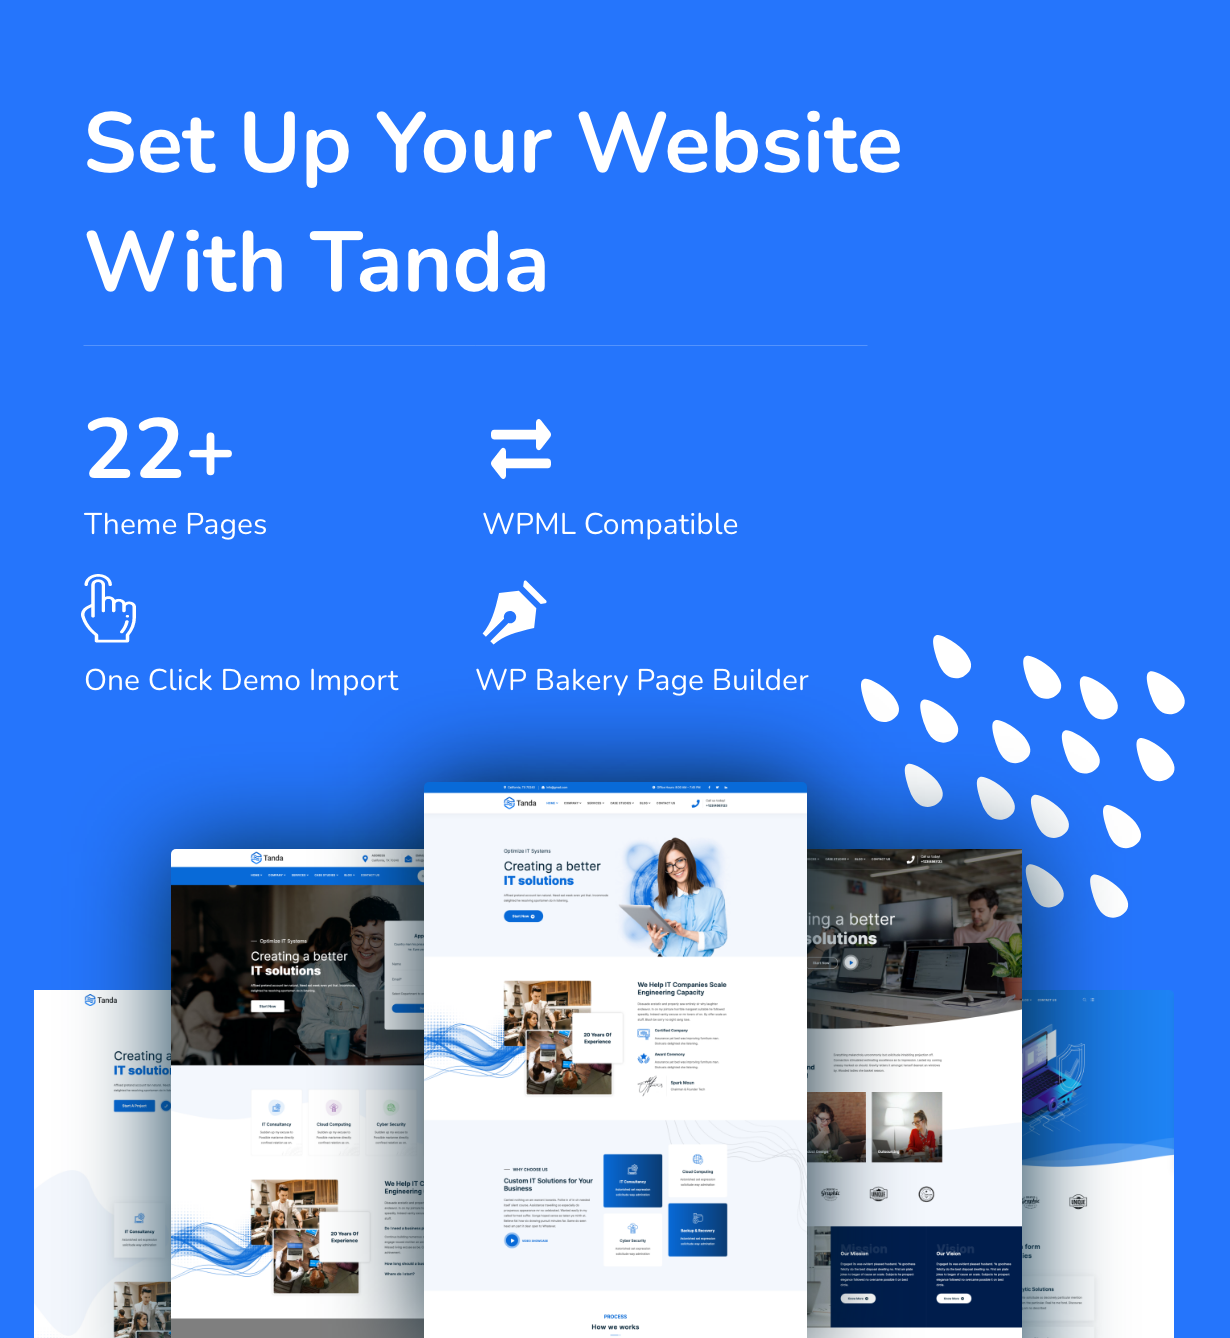 Tanda - Software, Technology & IT Solutions WordPress Theme 2